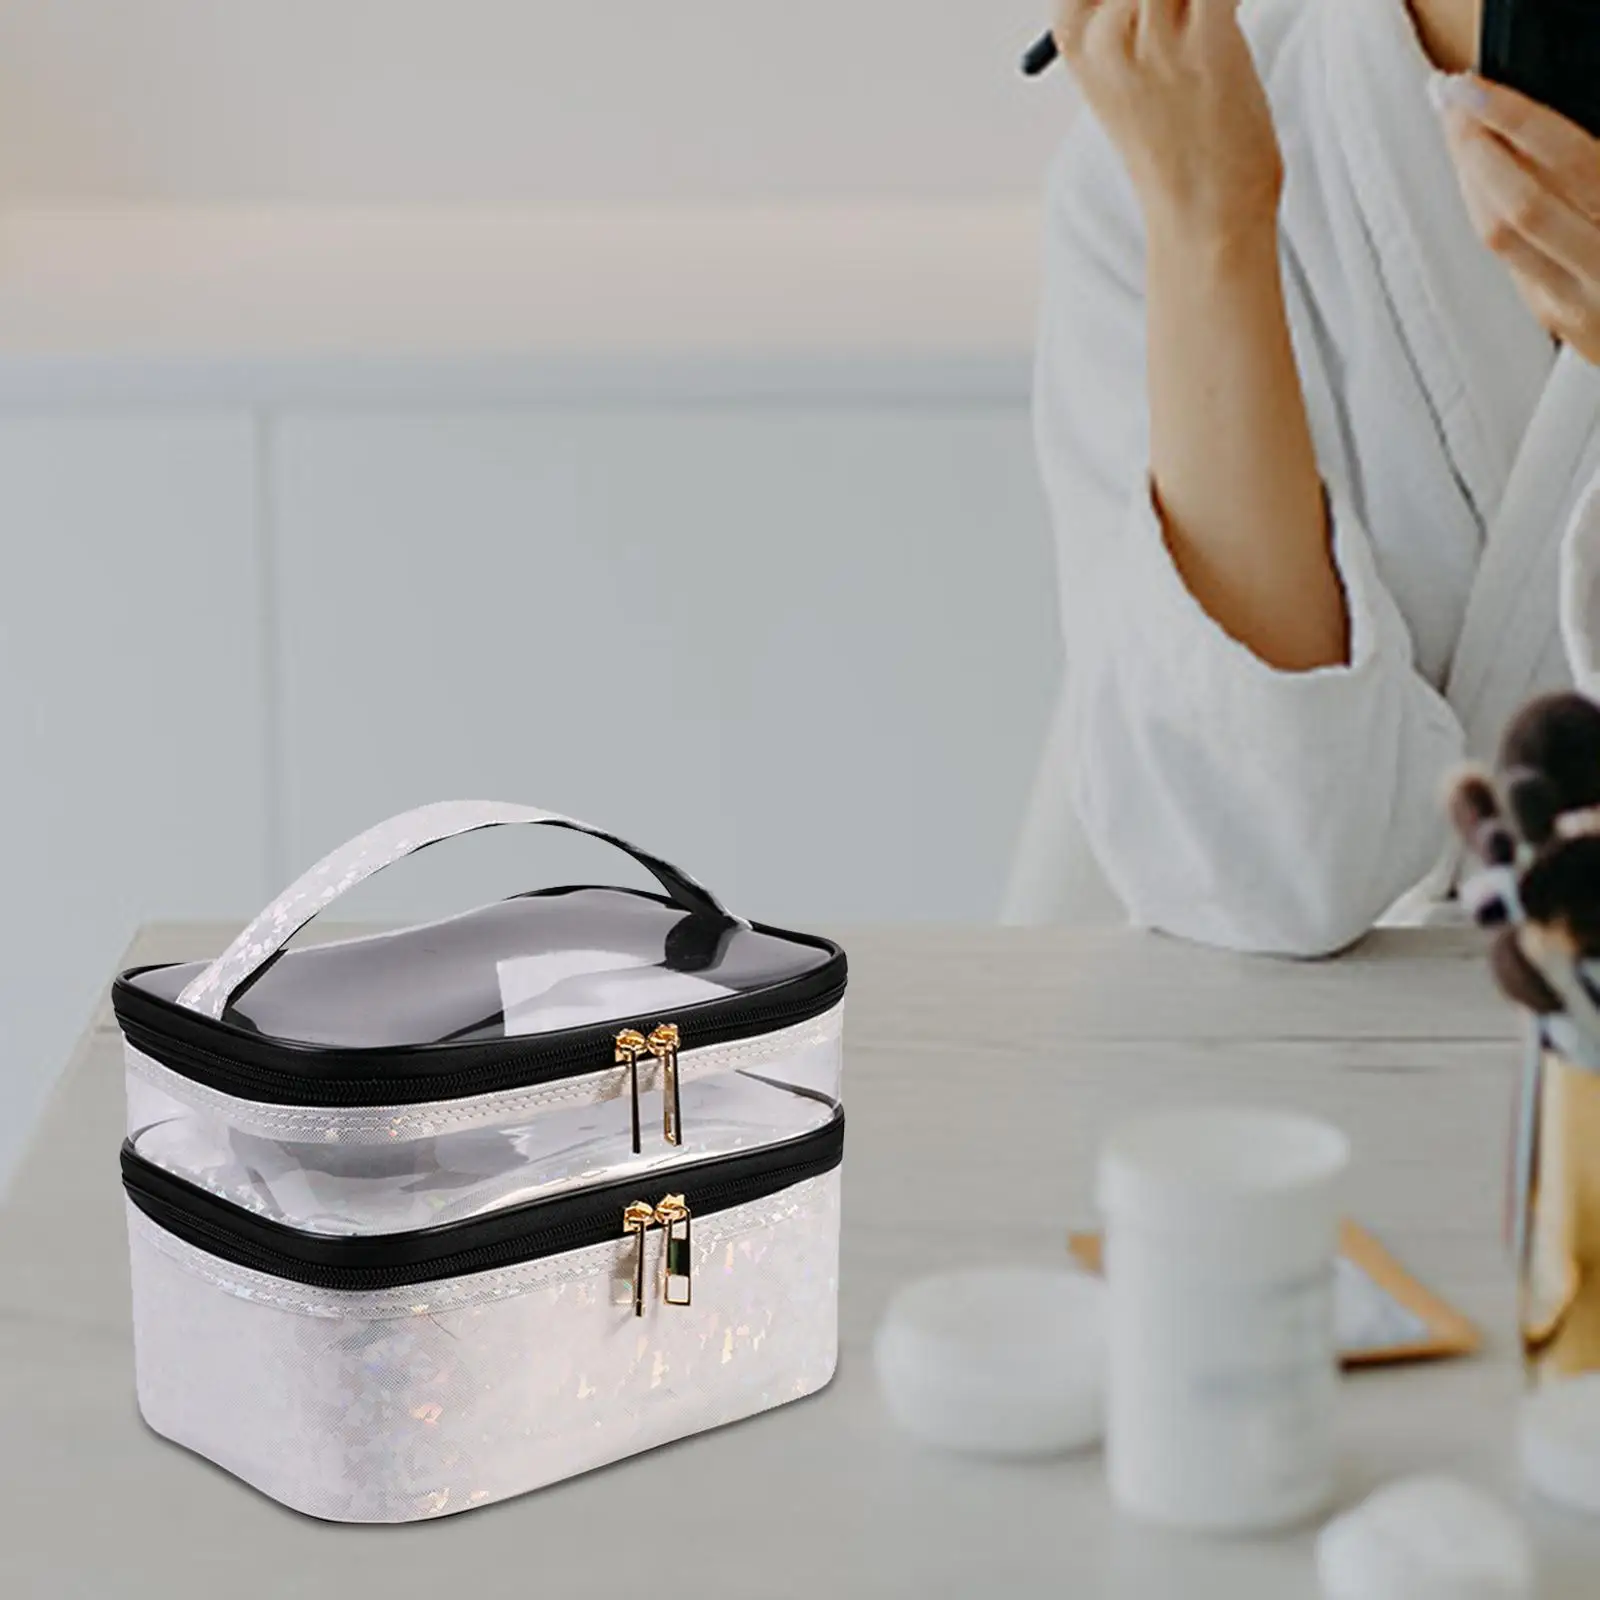 Portable Double Layer Cosmetic Bag Makeup Bag Toiletry Bag Size 21x16x18cm